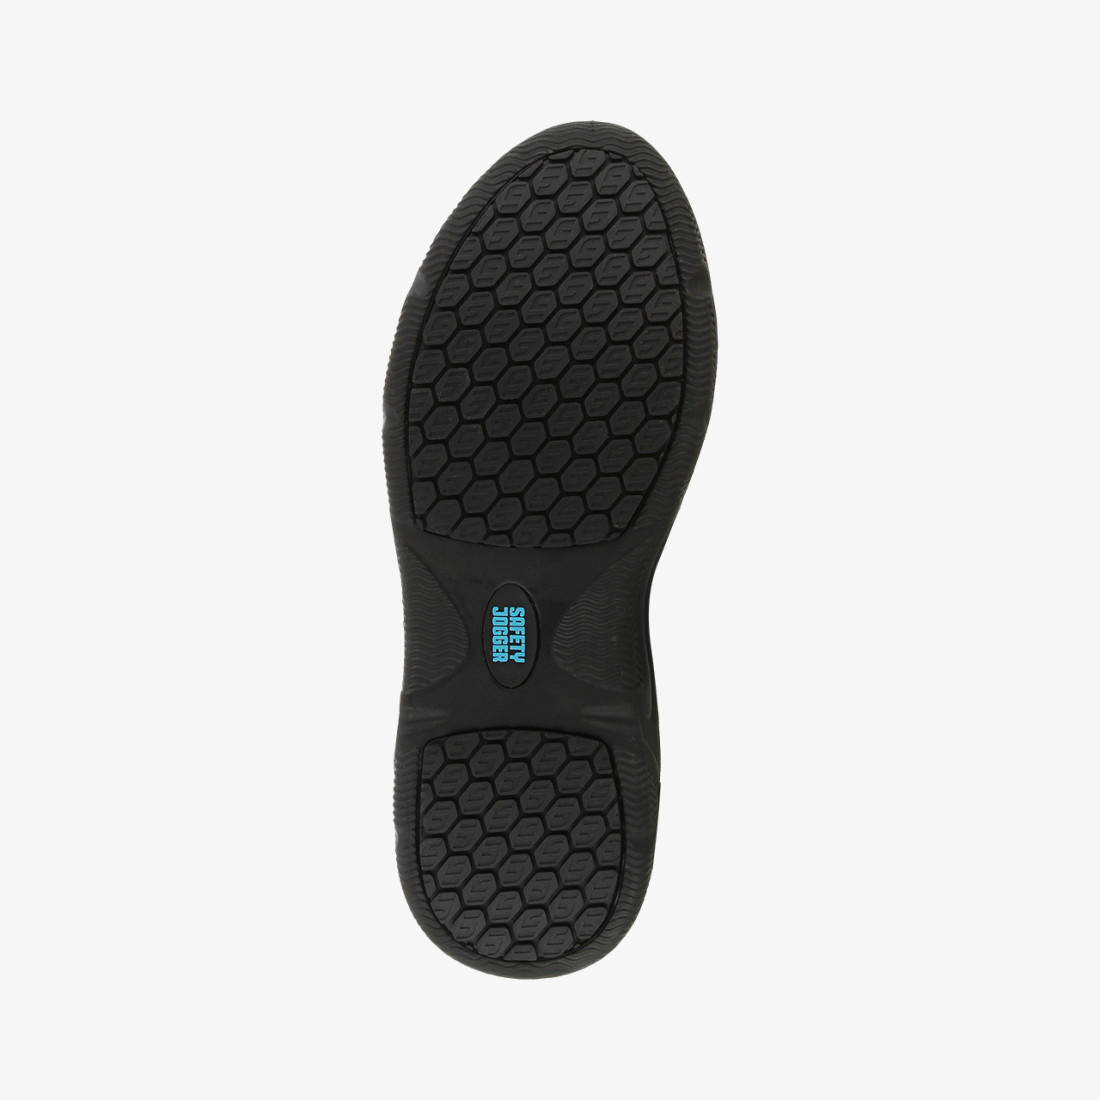 Adidasi unisex CHAMP O2 - Incaltaminte de protectie | Bocanci, Pantofi, Sandale, Cizme